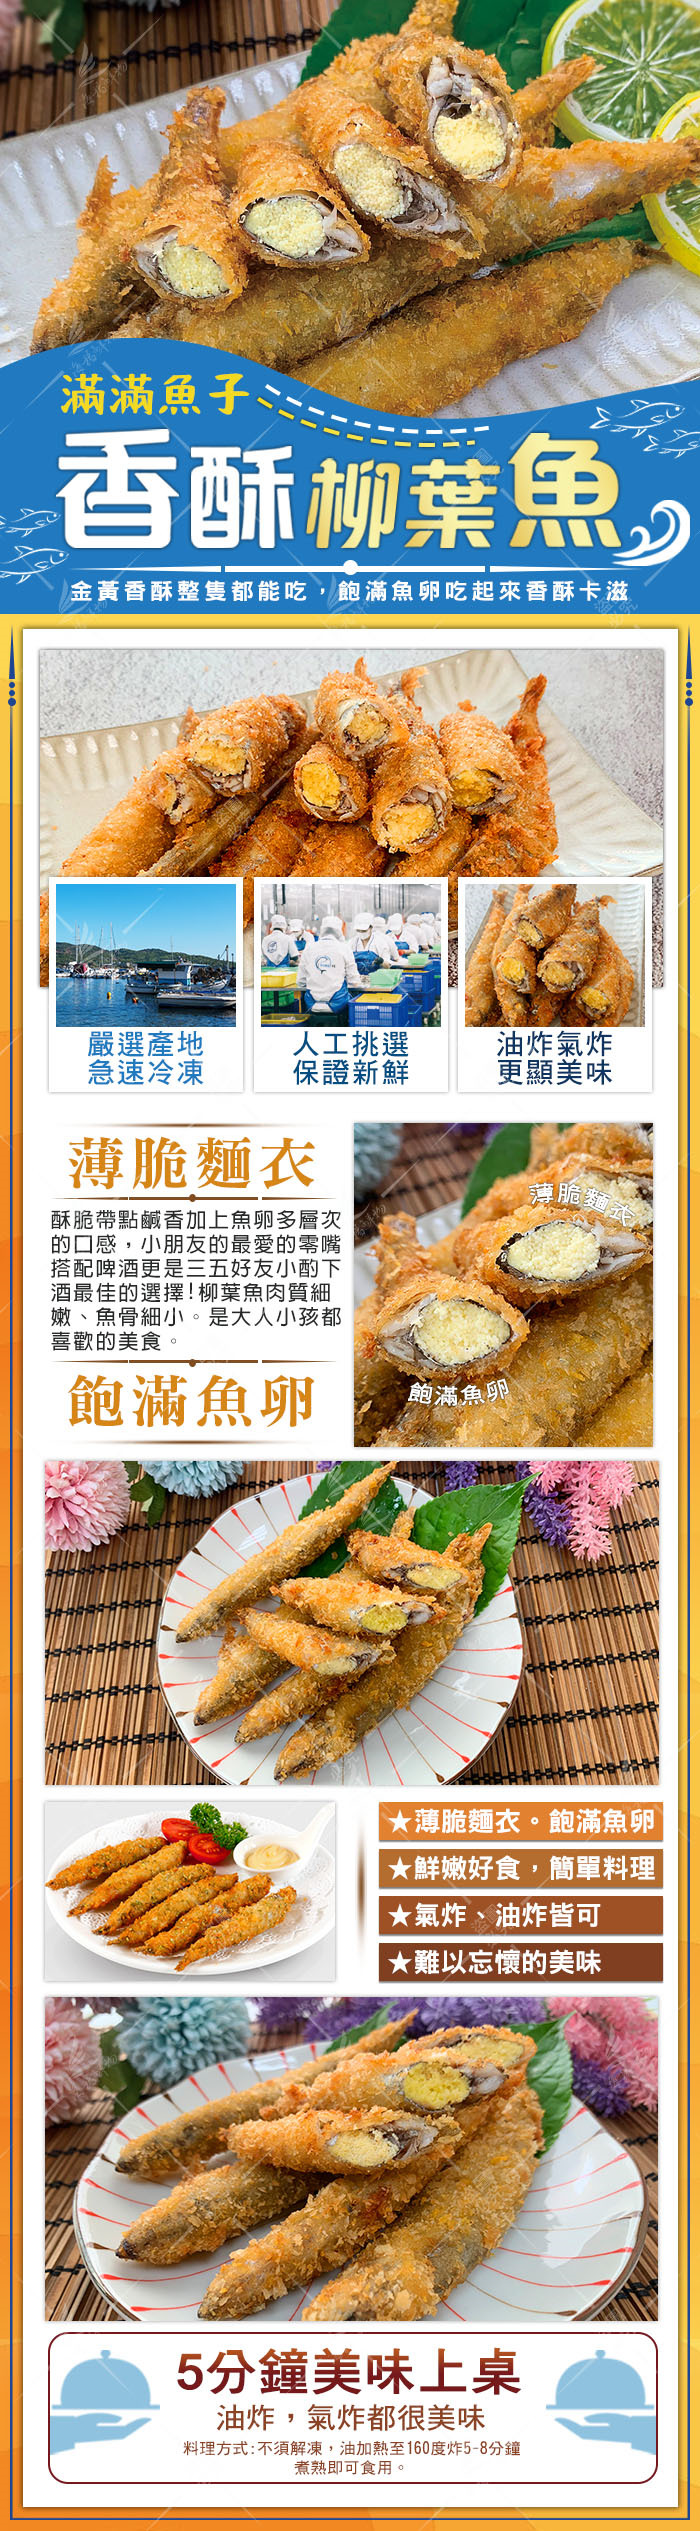 2112Q5100_滿滿魚子香酥柳葉魚ad.jpg